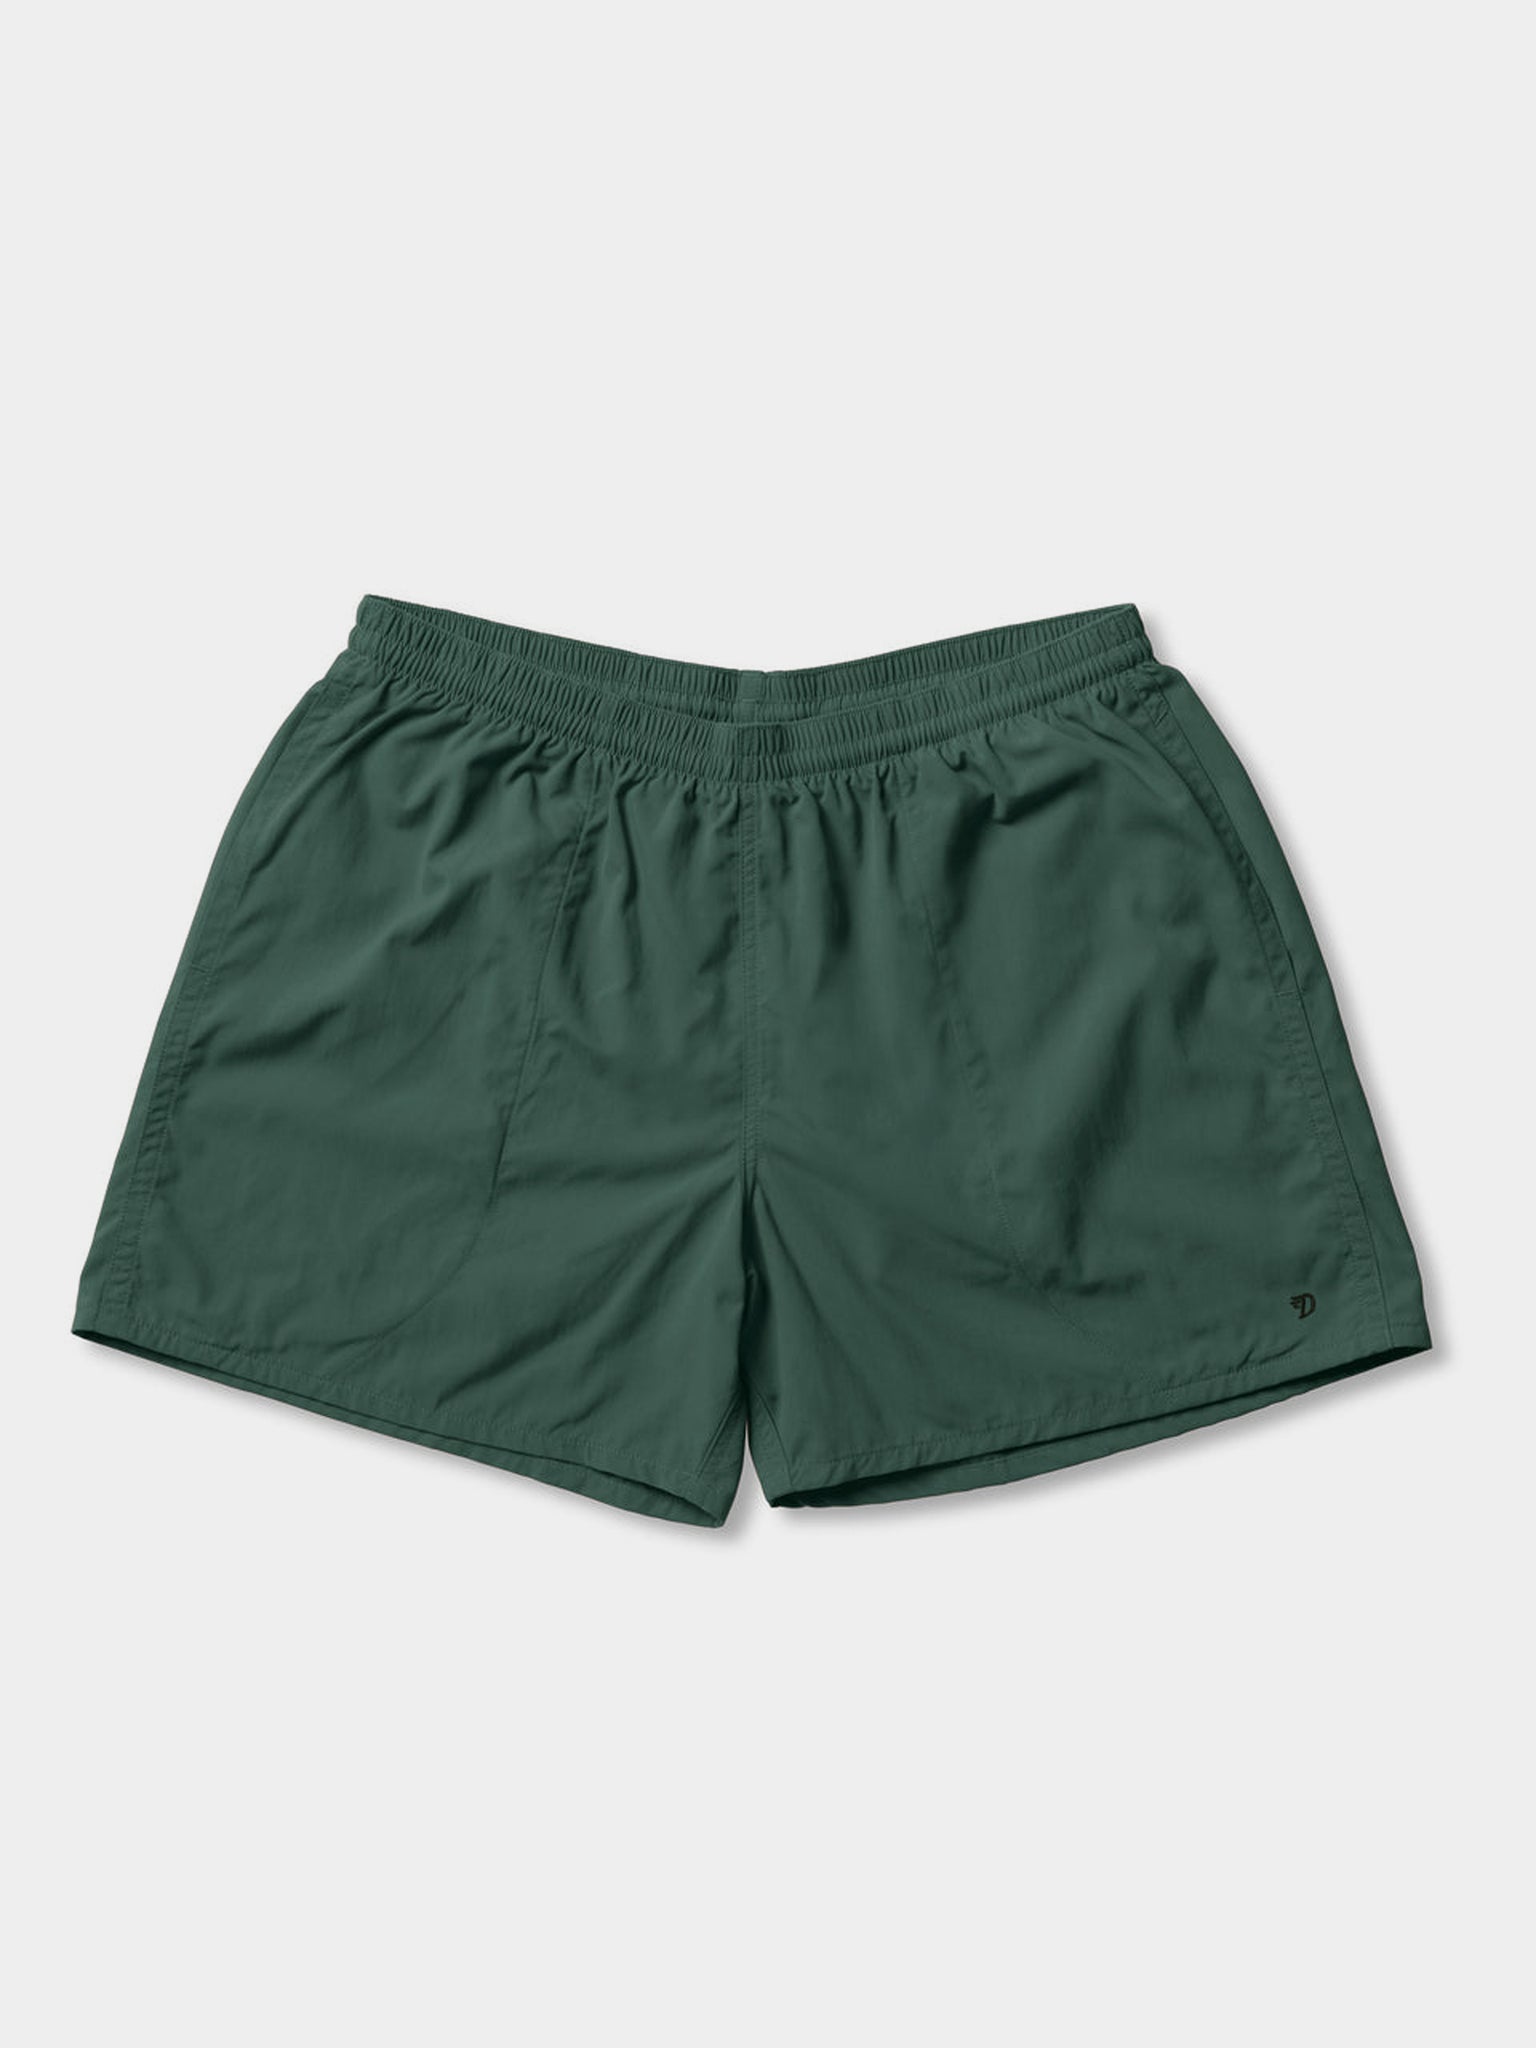 Scout Shorts 5" - Gator Green